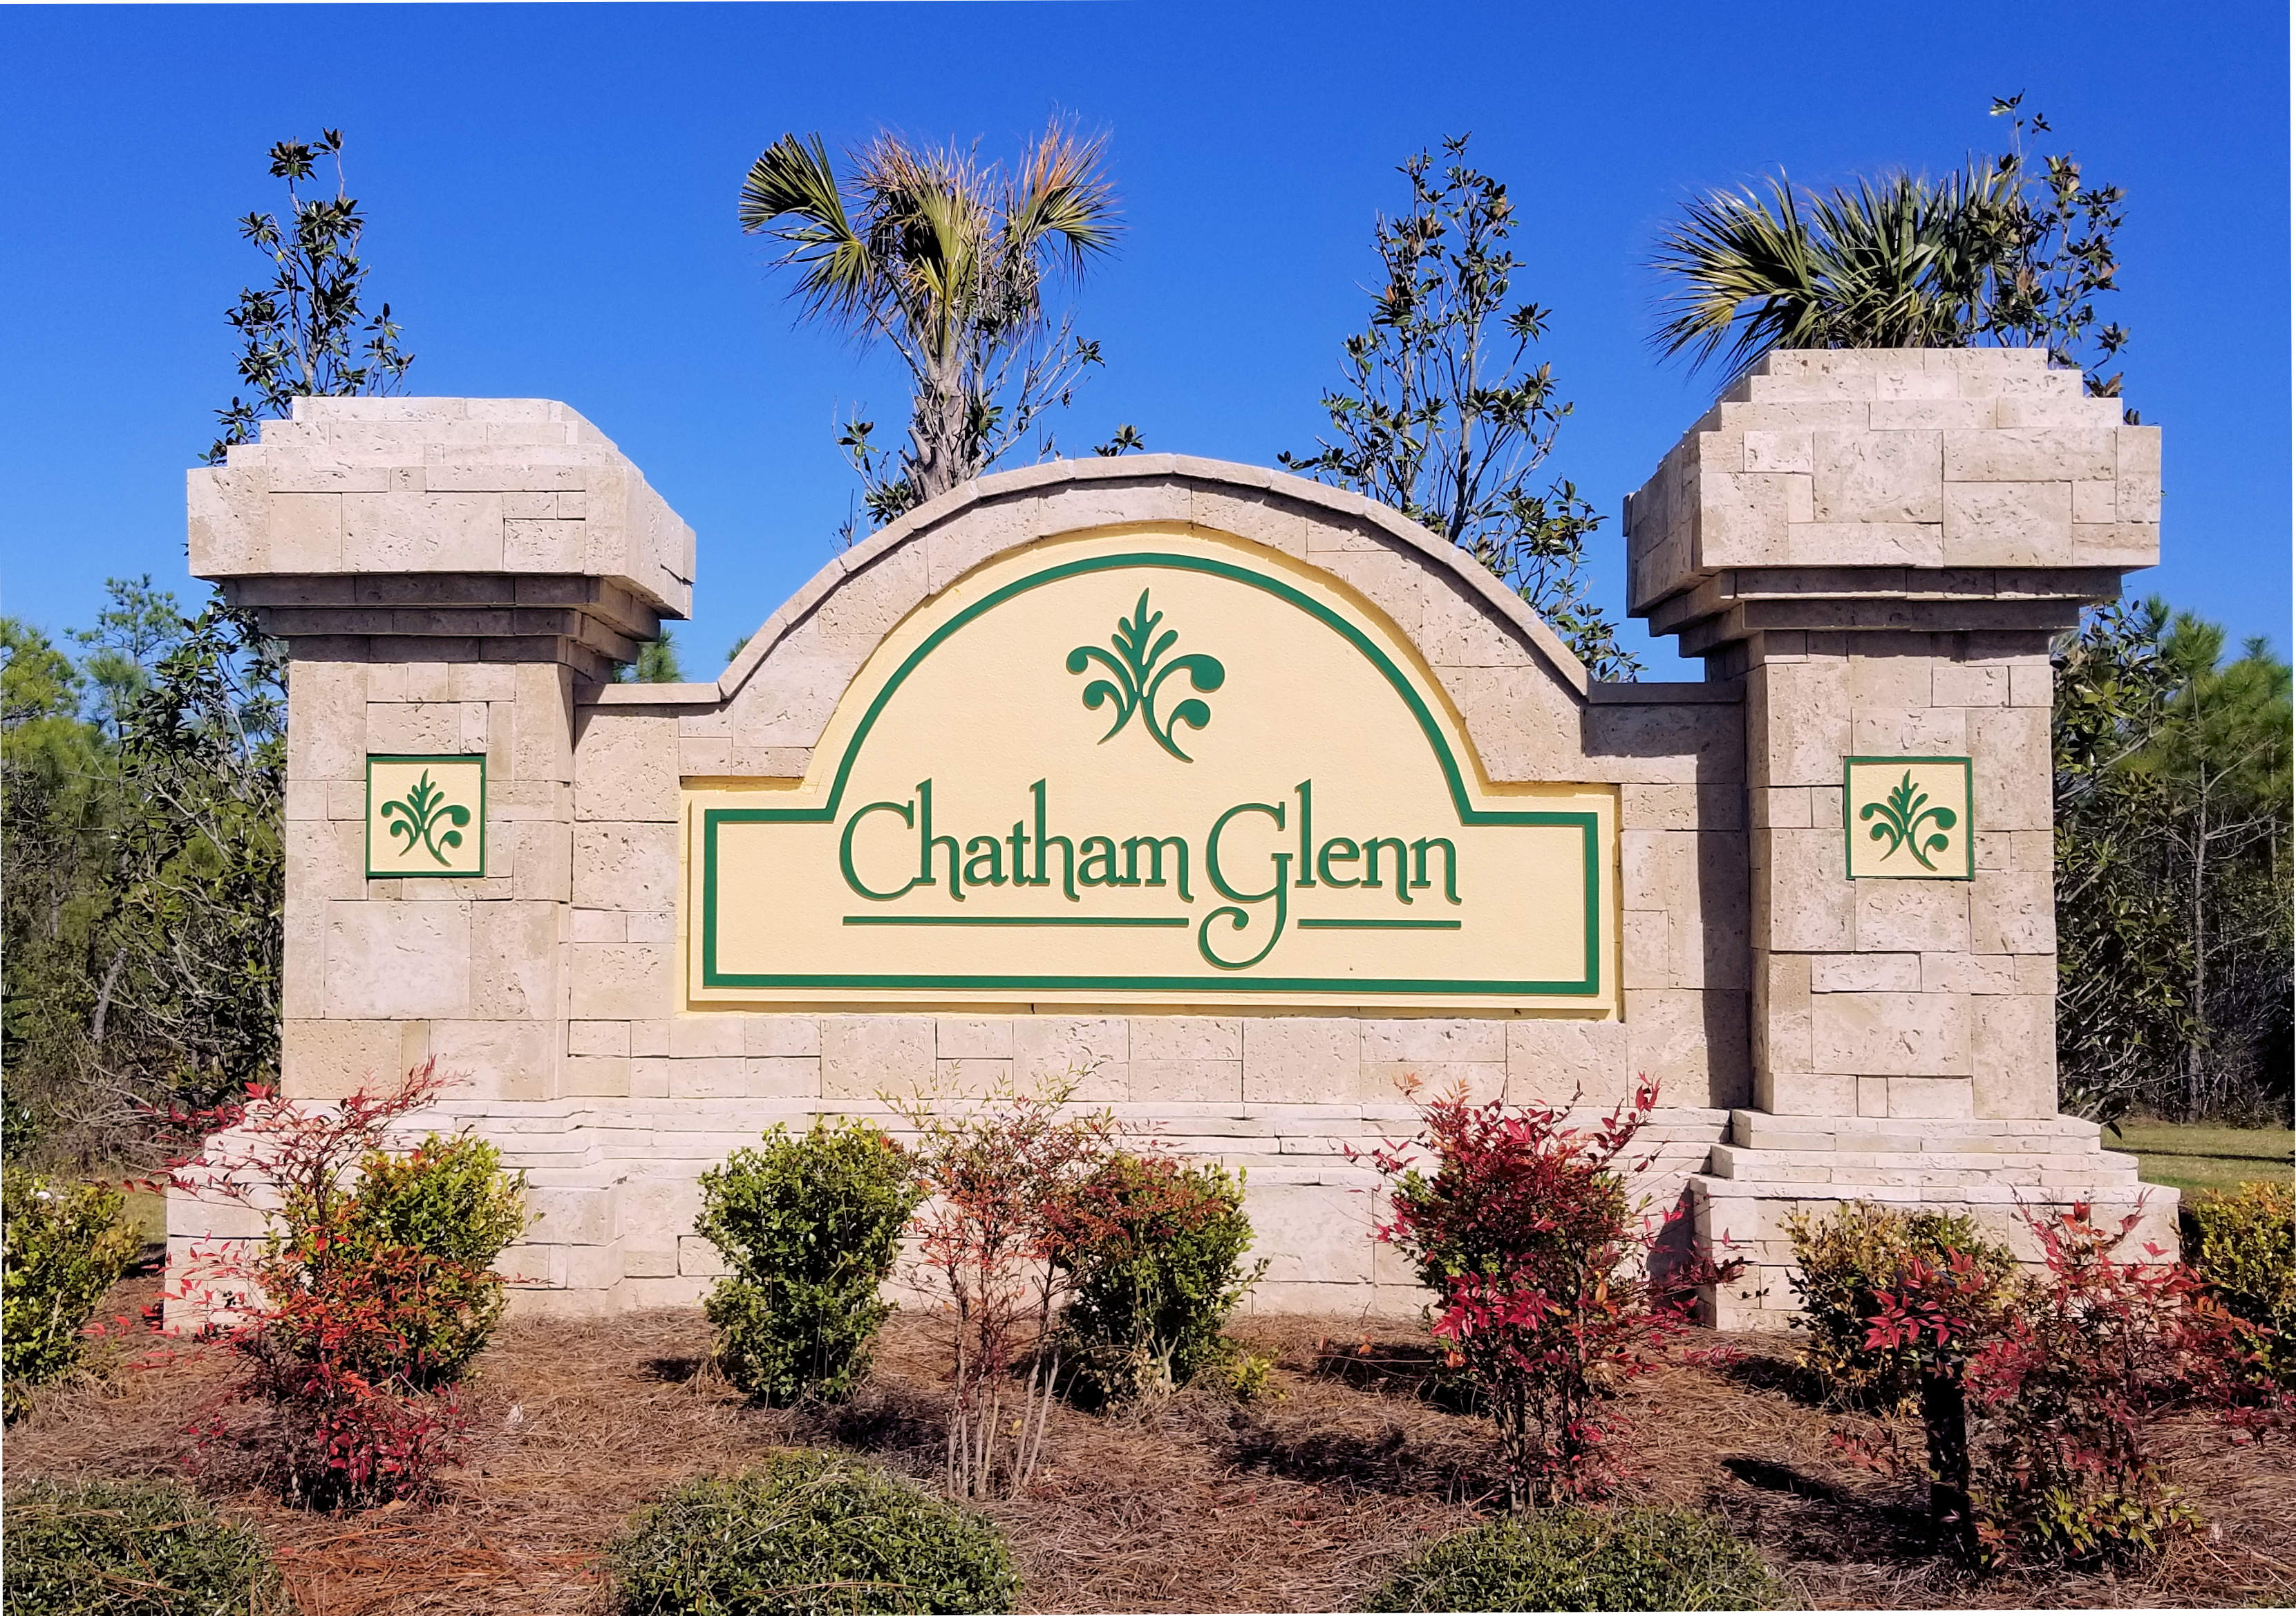 Chatham Glenn Is A New Community In Ocean Isle Beach Nc Featuring